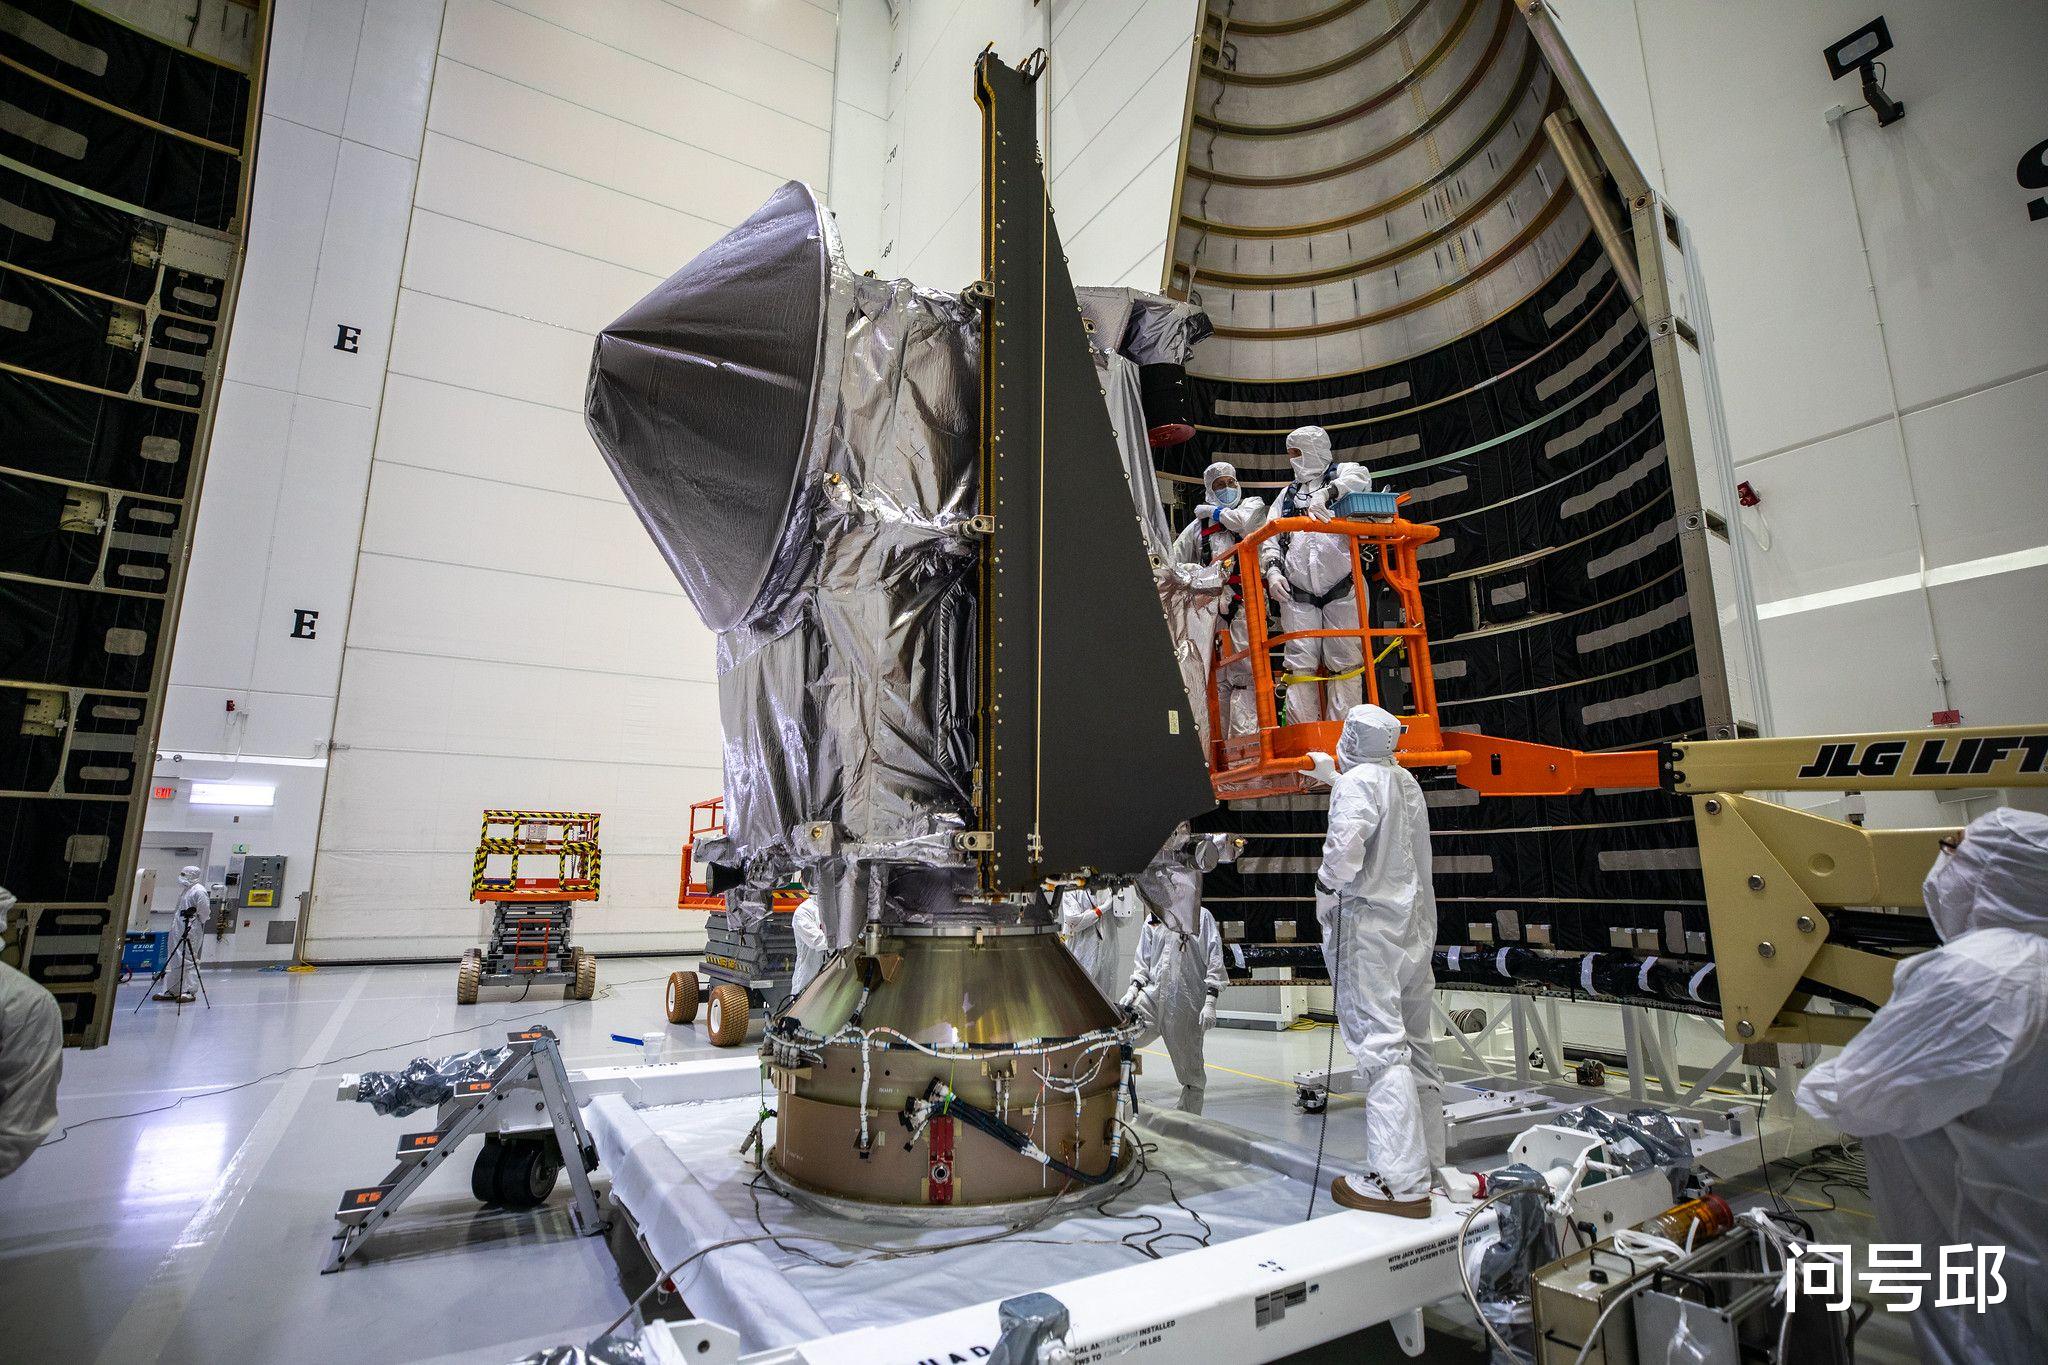 NASA派出“露西”号执行一项特殊任务，前往特洛伊小行星探索奥秘